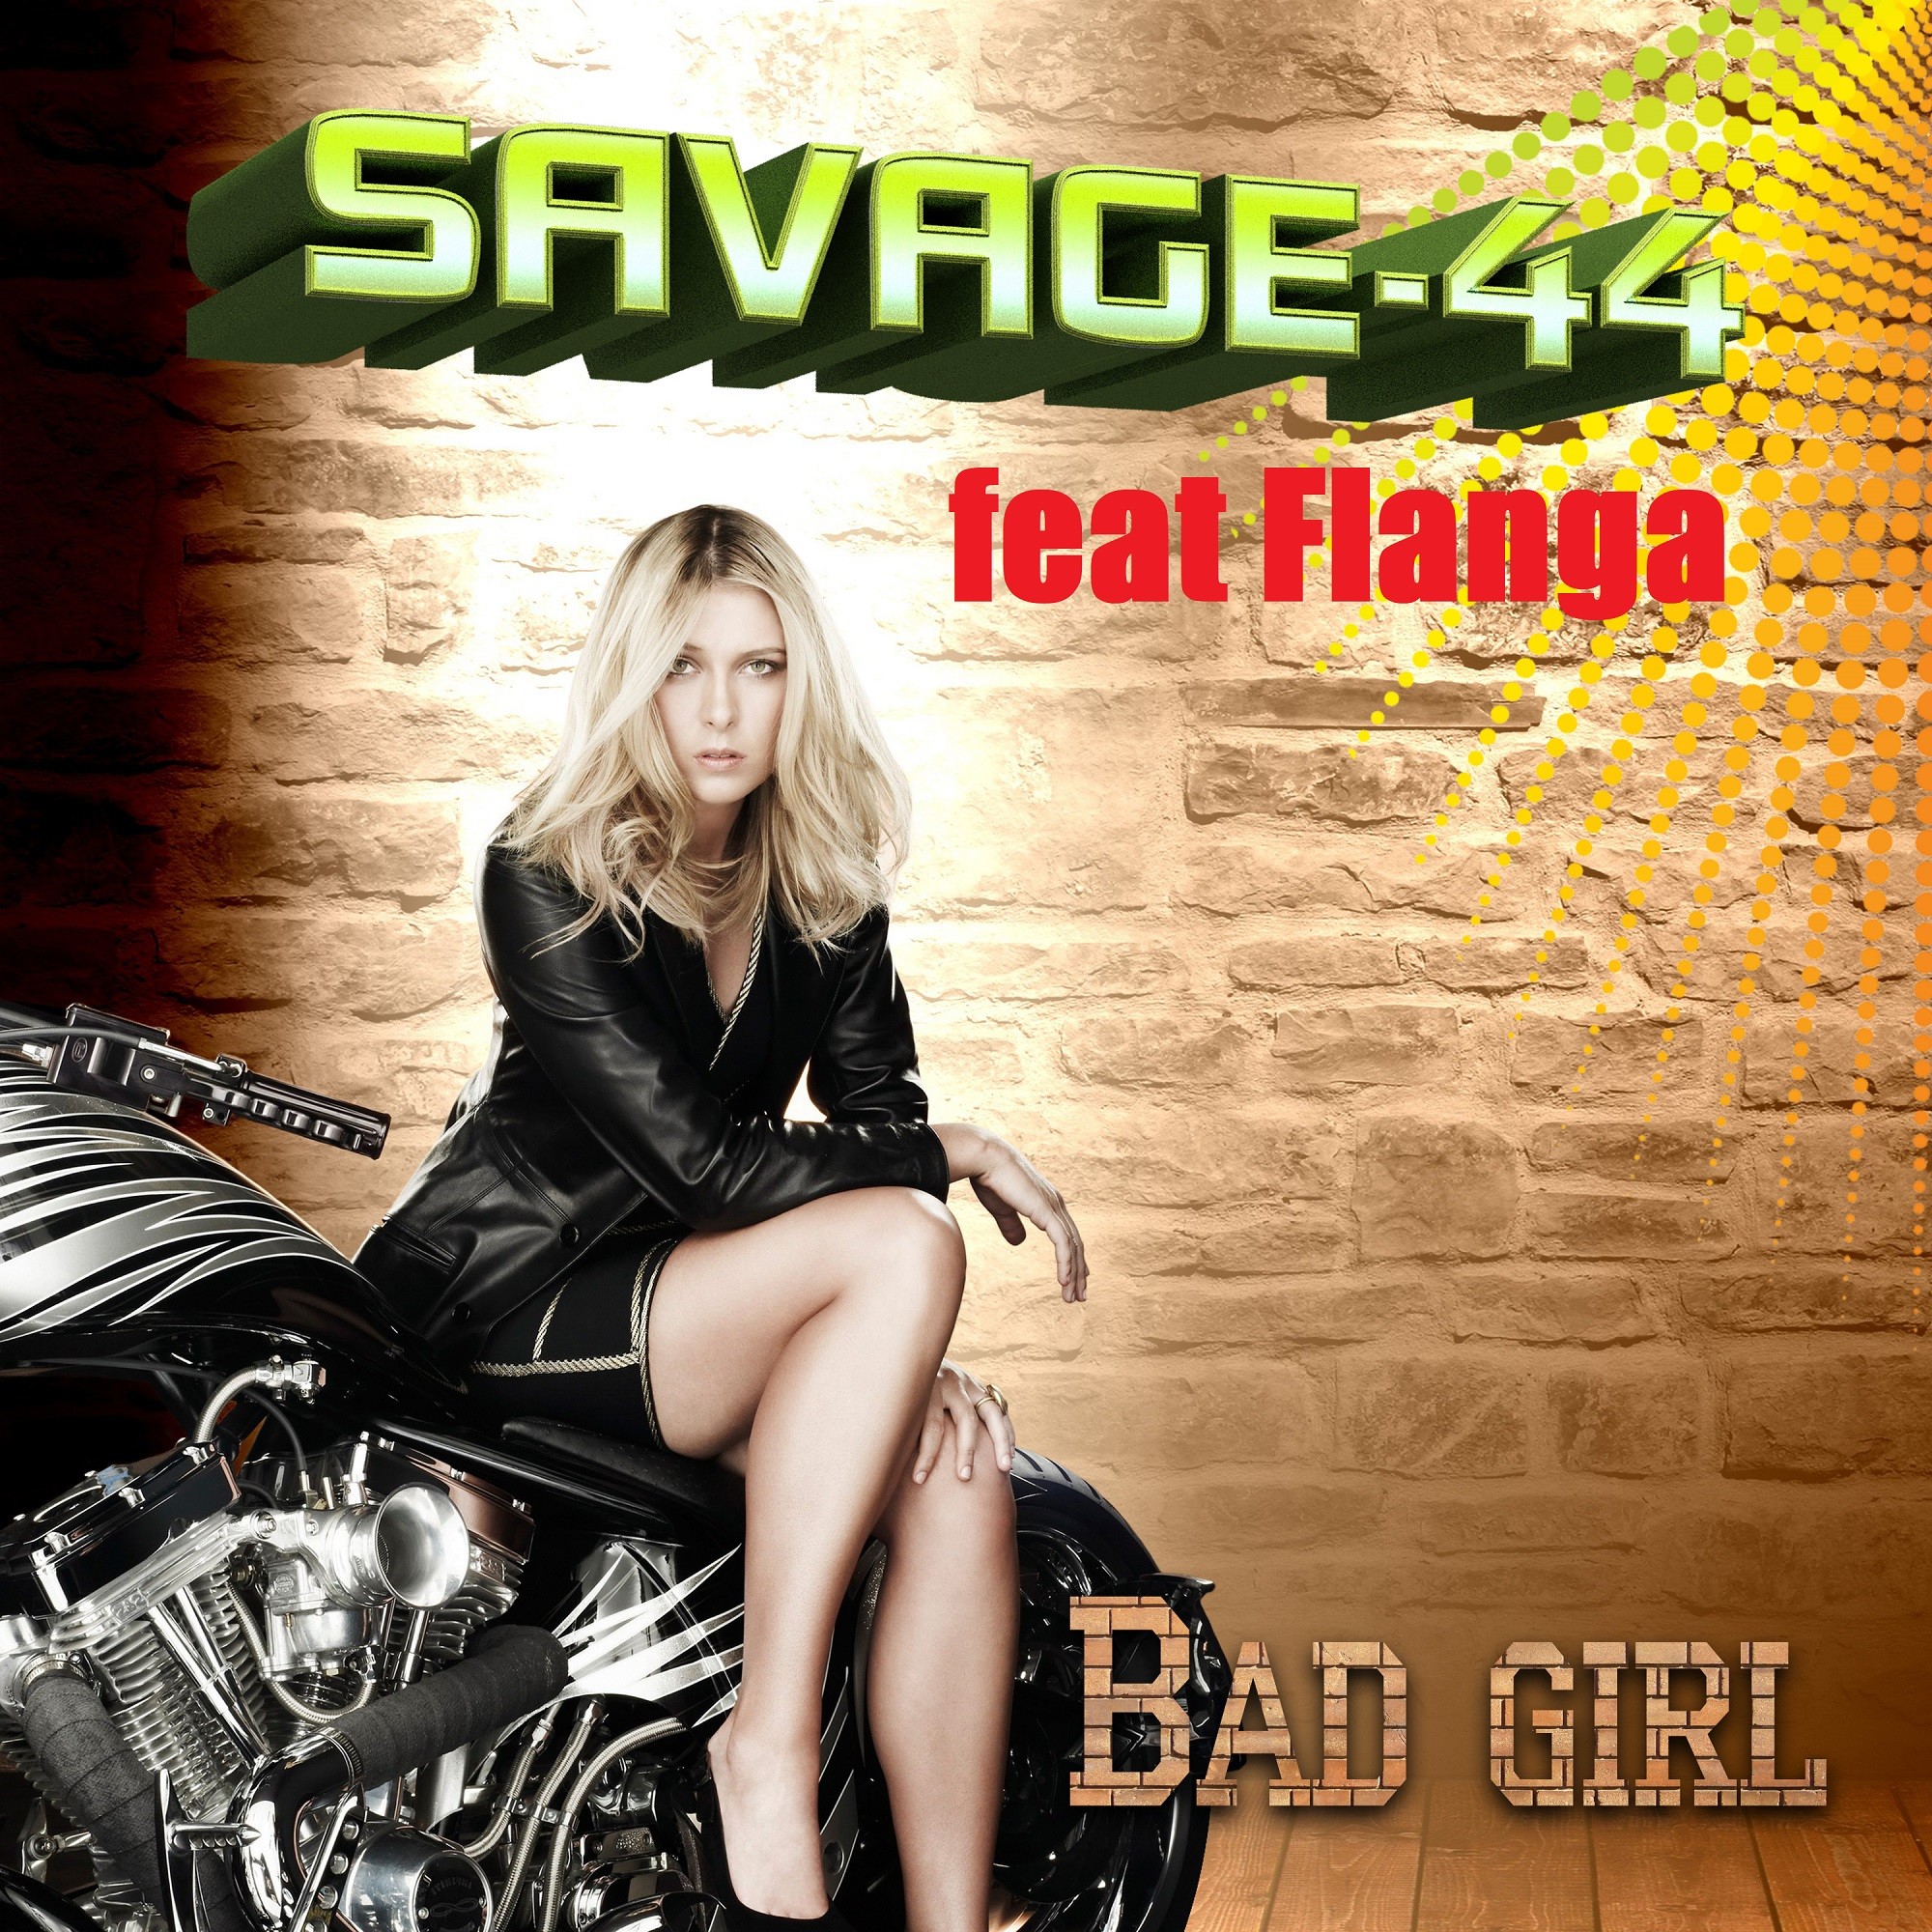 Savage 44. Девушки из Savage. Девушка из группы Savage-44.